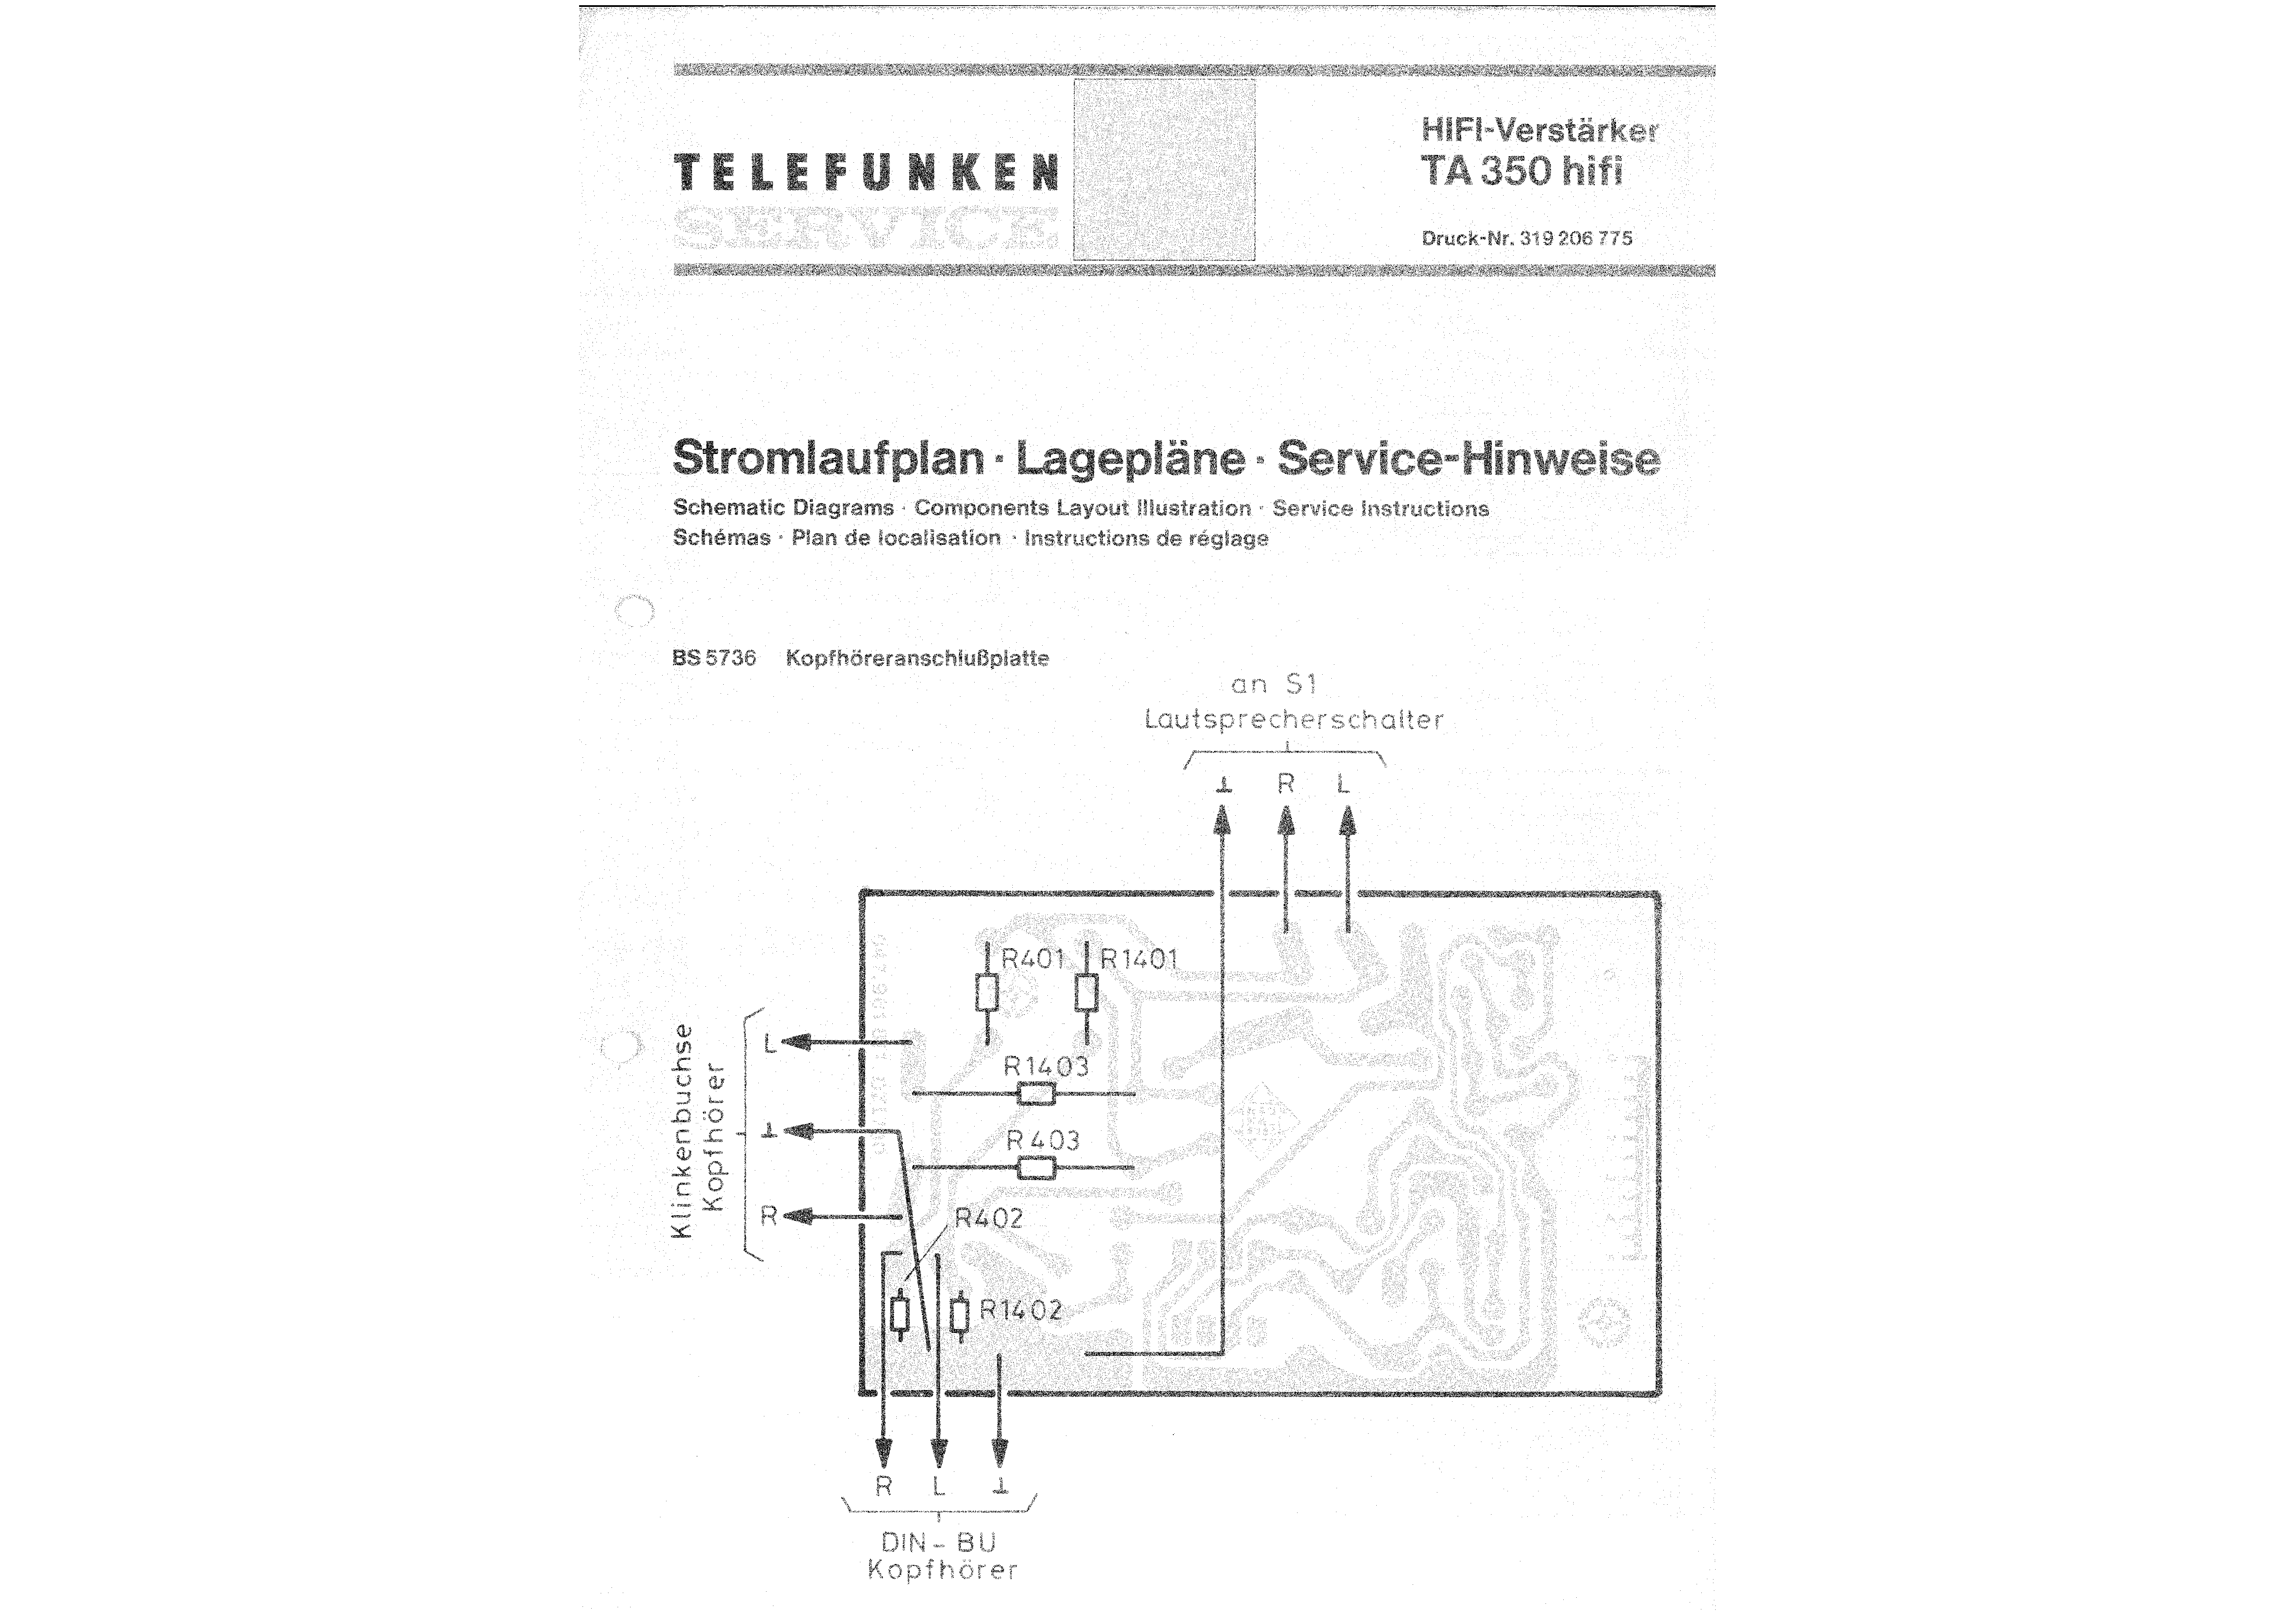 Service Manual for TELEFUNKEN TA350 - Download